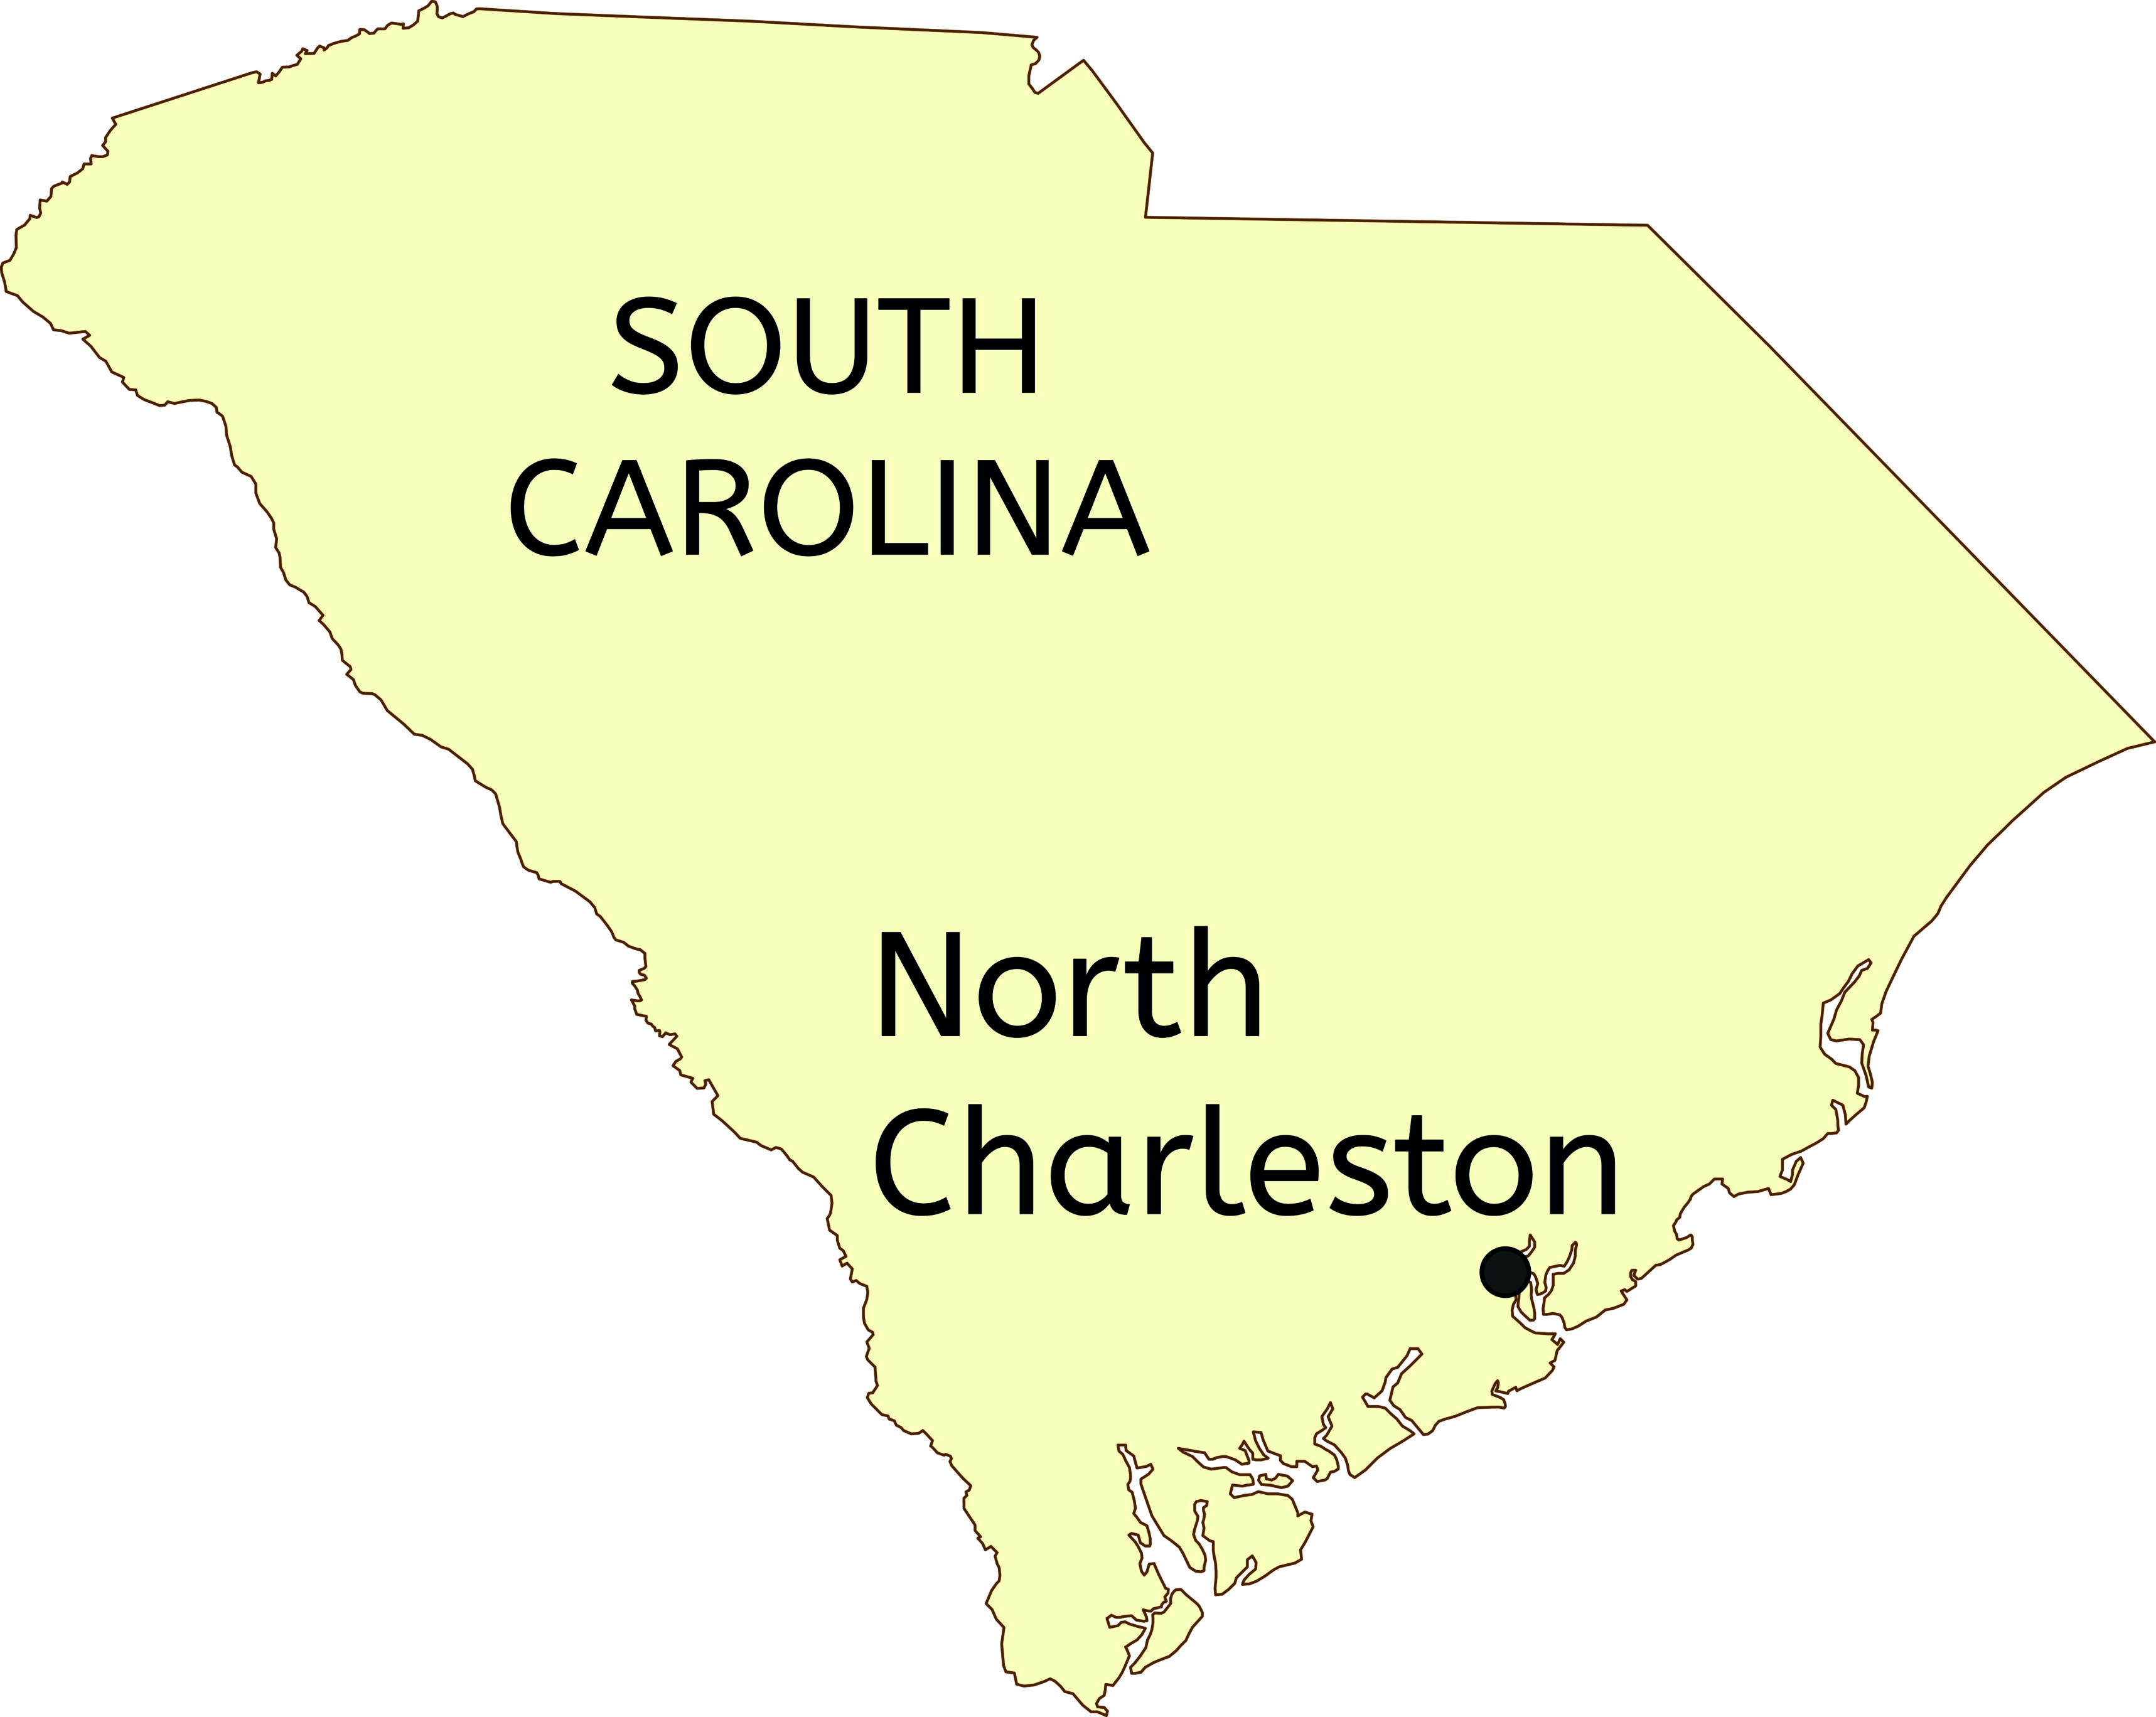 North Charleston, South Carolina 